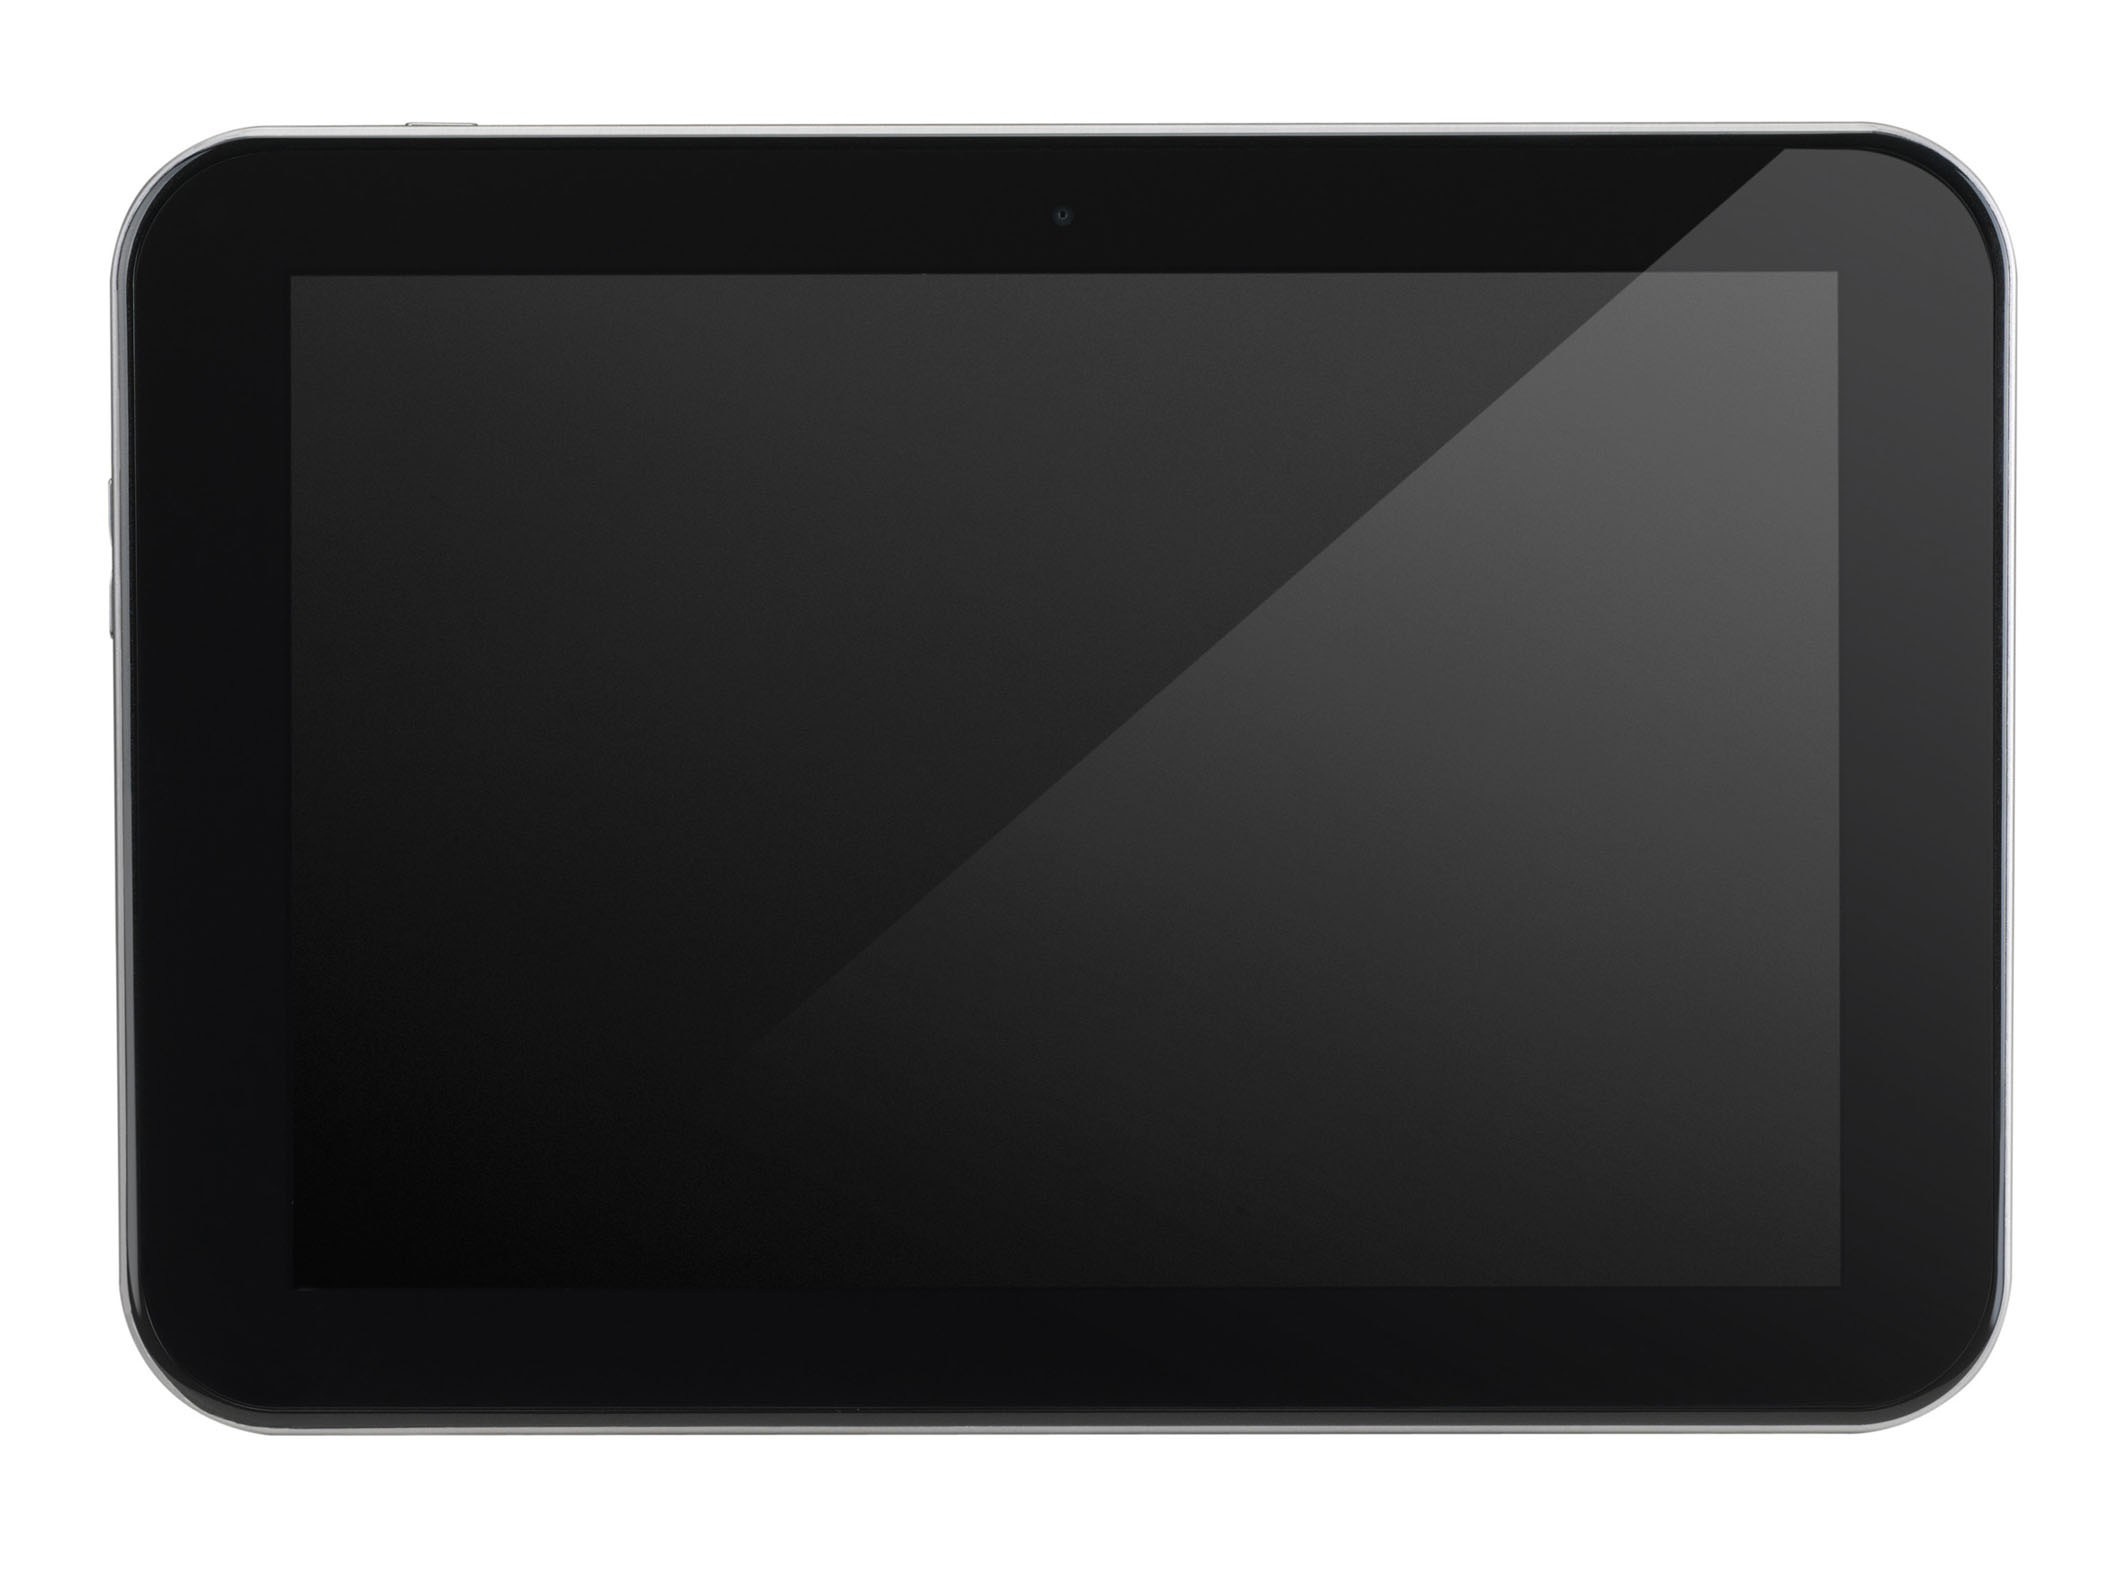 Toshiba presenta il nuovo tablet AT300SE con Android 4.1 Jelly Bean